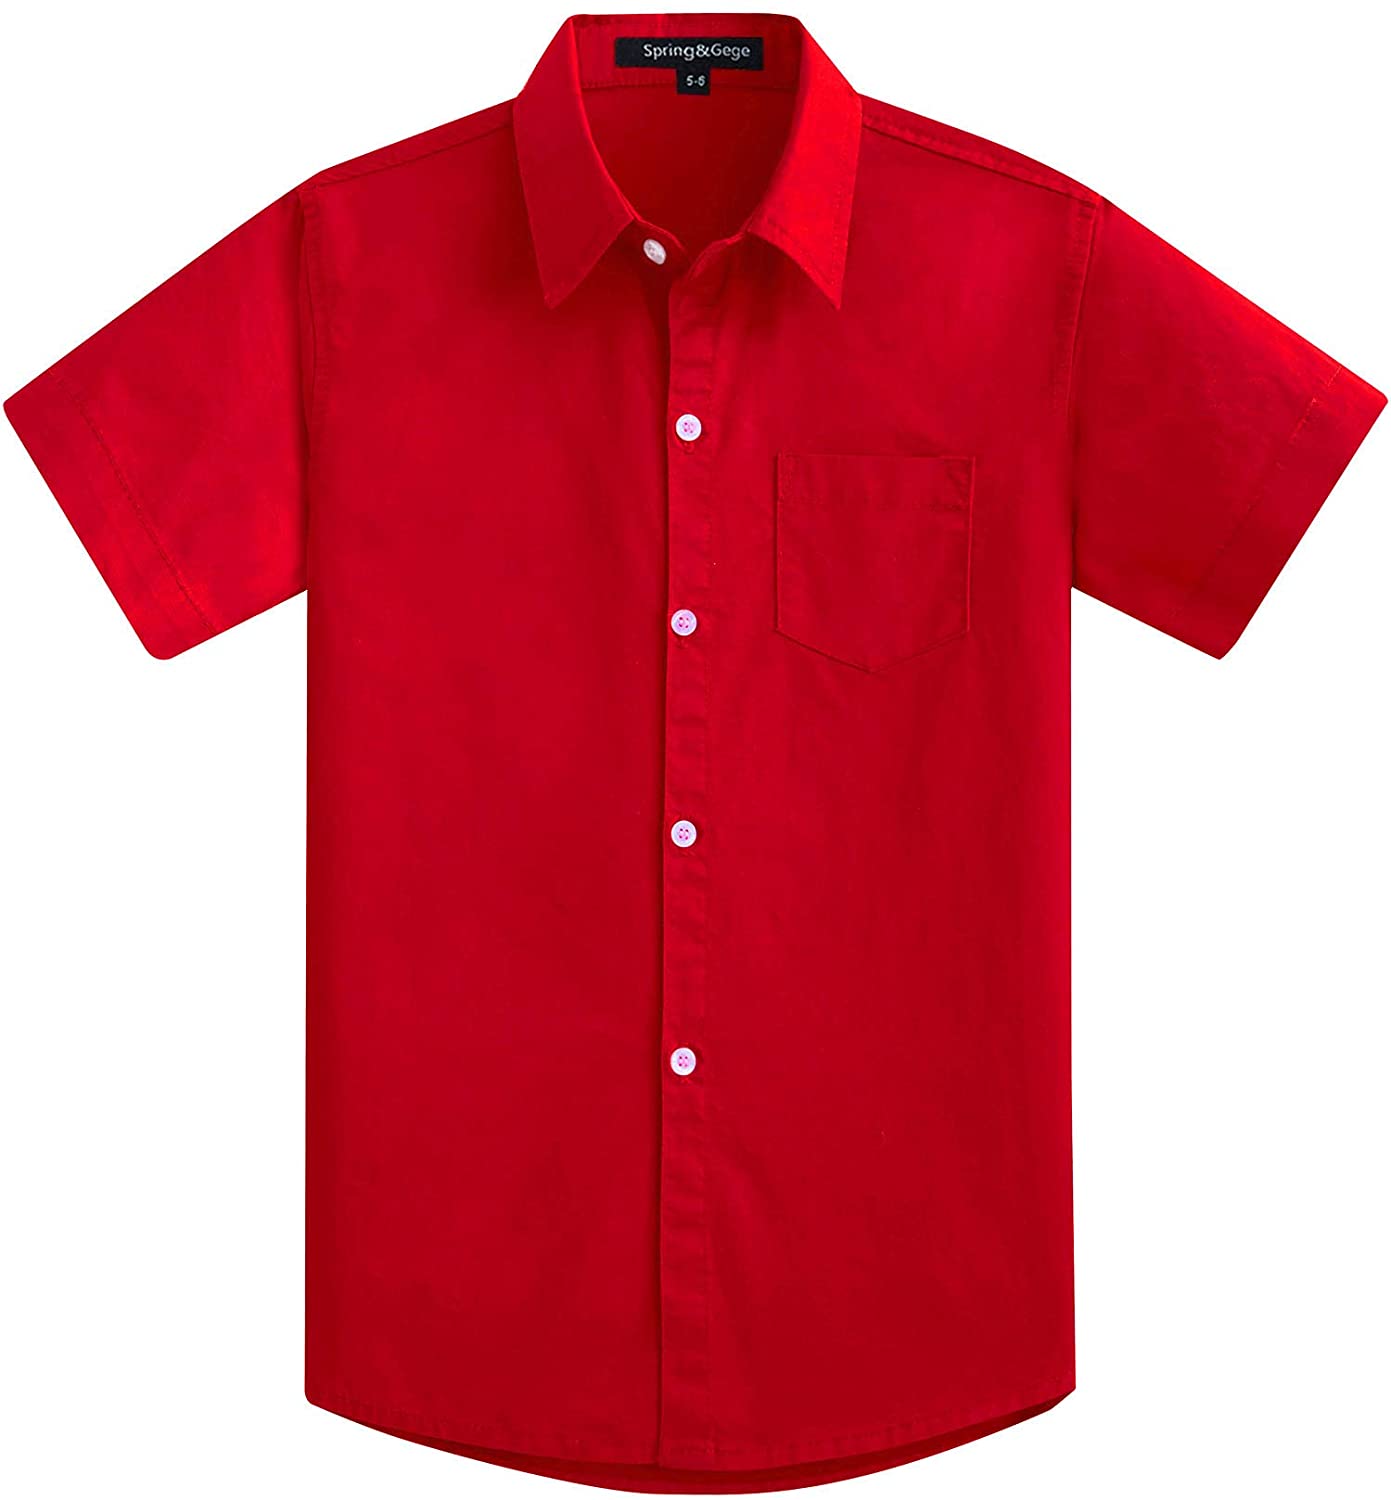 Spring&Gege Boys' Long Sleeve Dress Shirts Formal Uniform Woven Solid 